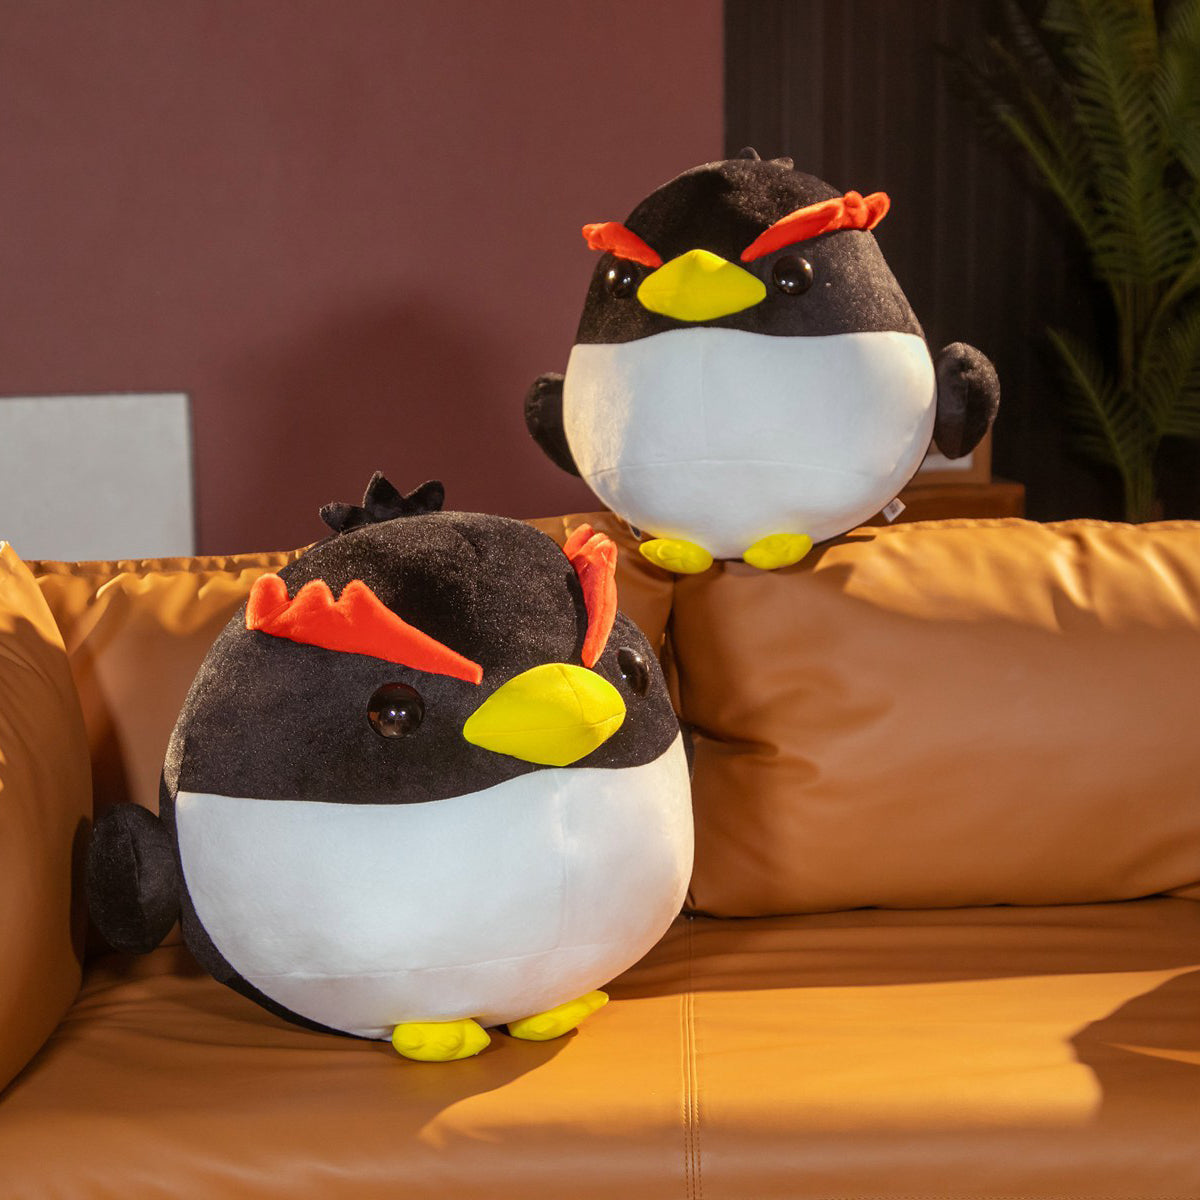 Black Kawaii Angry Penguin Stuffed Animals Plushie